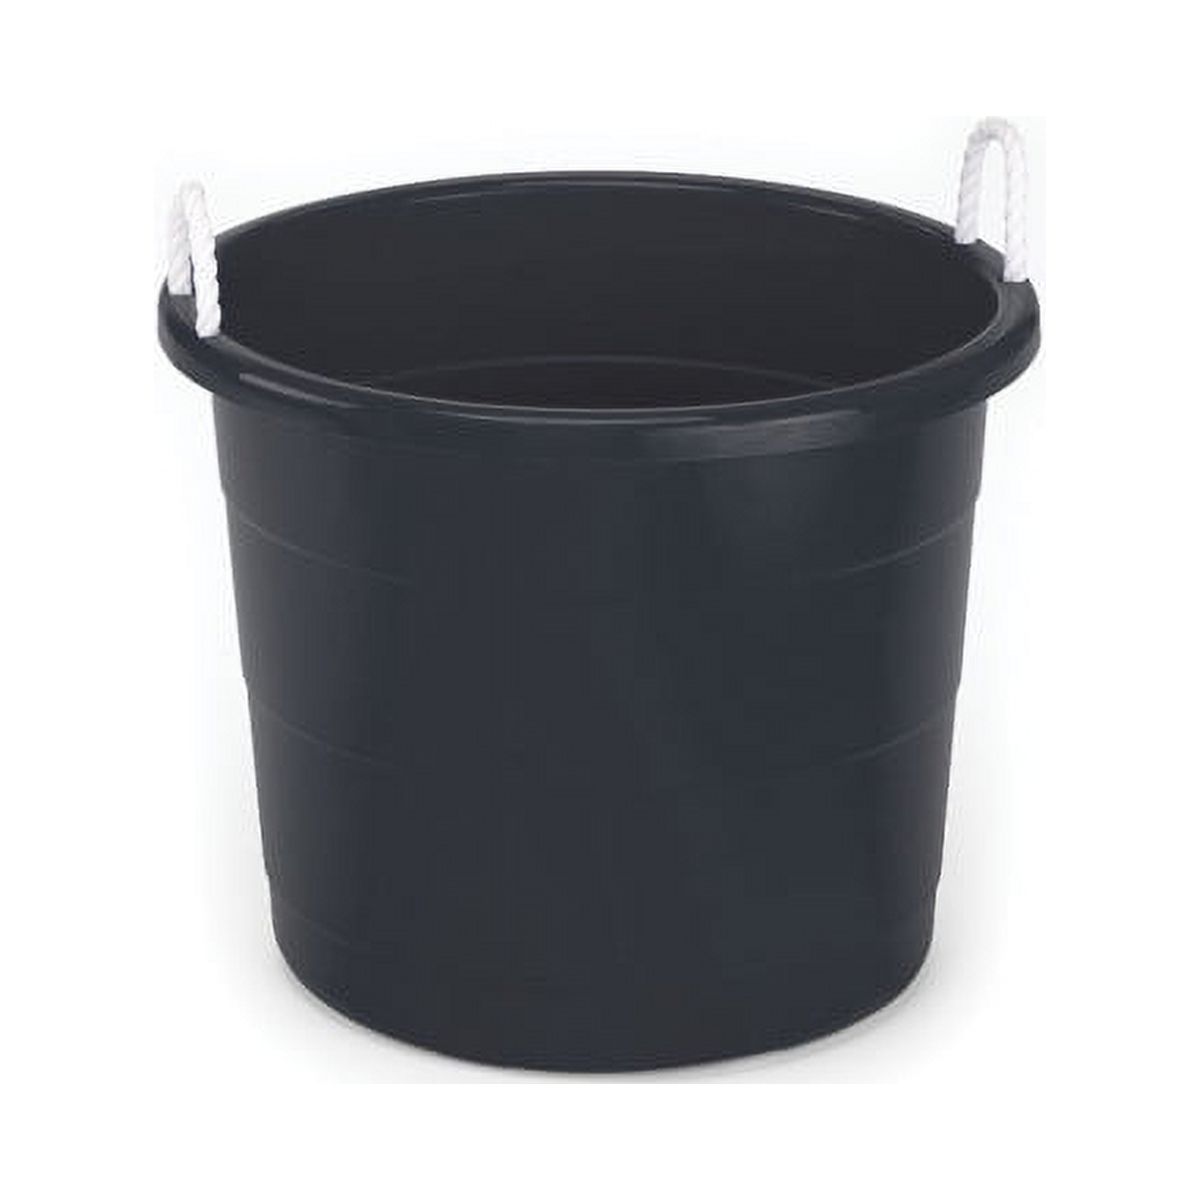 Mainstays 17-Gallon Rope-Handled Storage Tub, Black - image 1 of 7